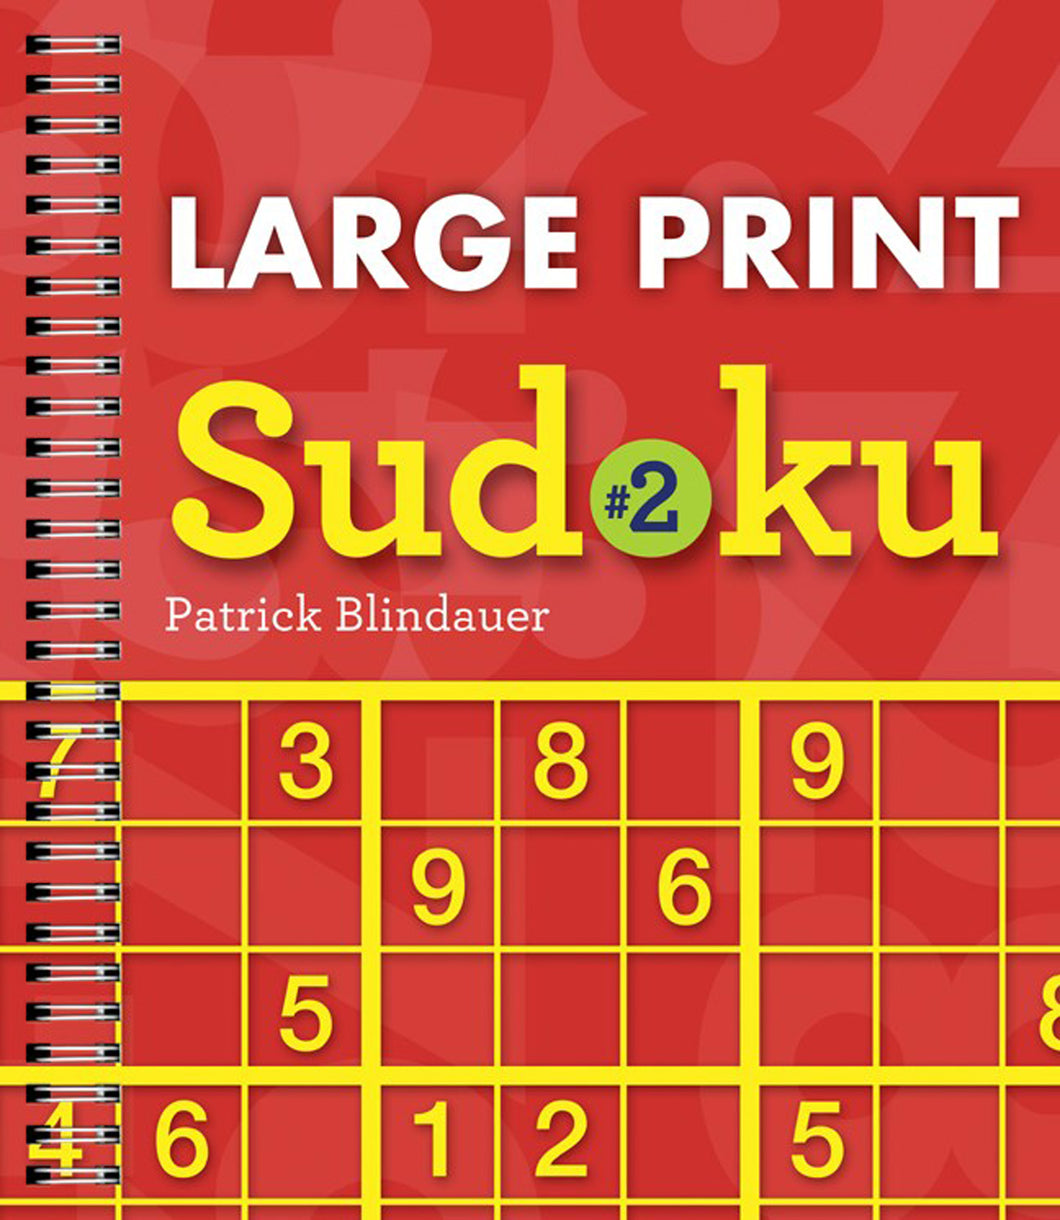 Image of Large Print Sudoku No2